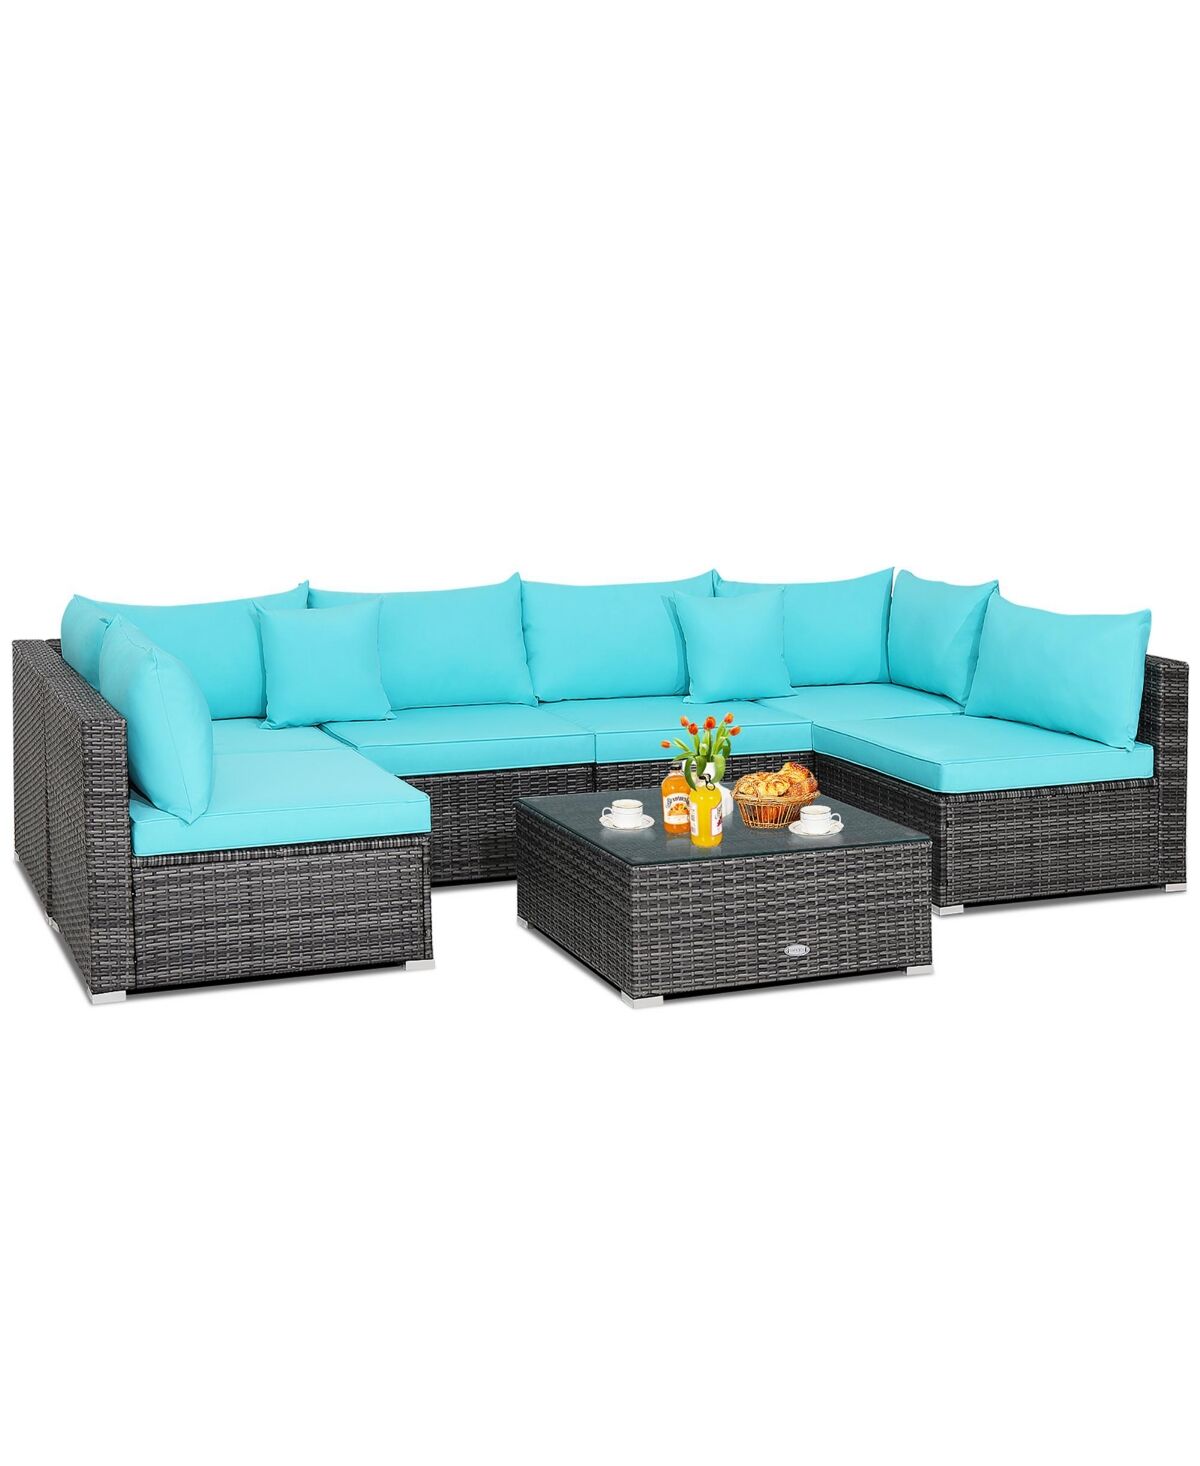 Costway 7PCS Patio Rattan Furniture Set Sectional Sofa Cushioned Garden - Turquoise